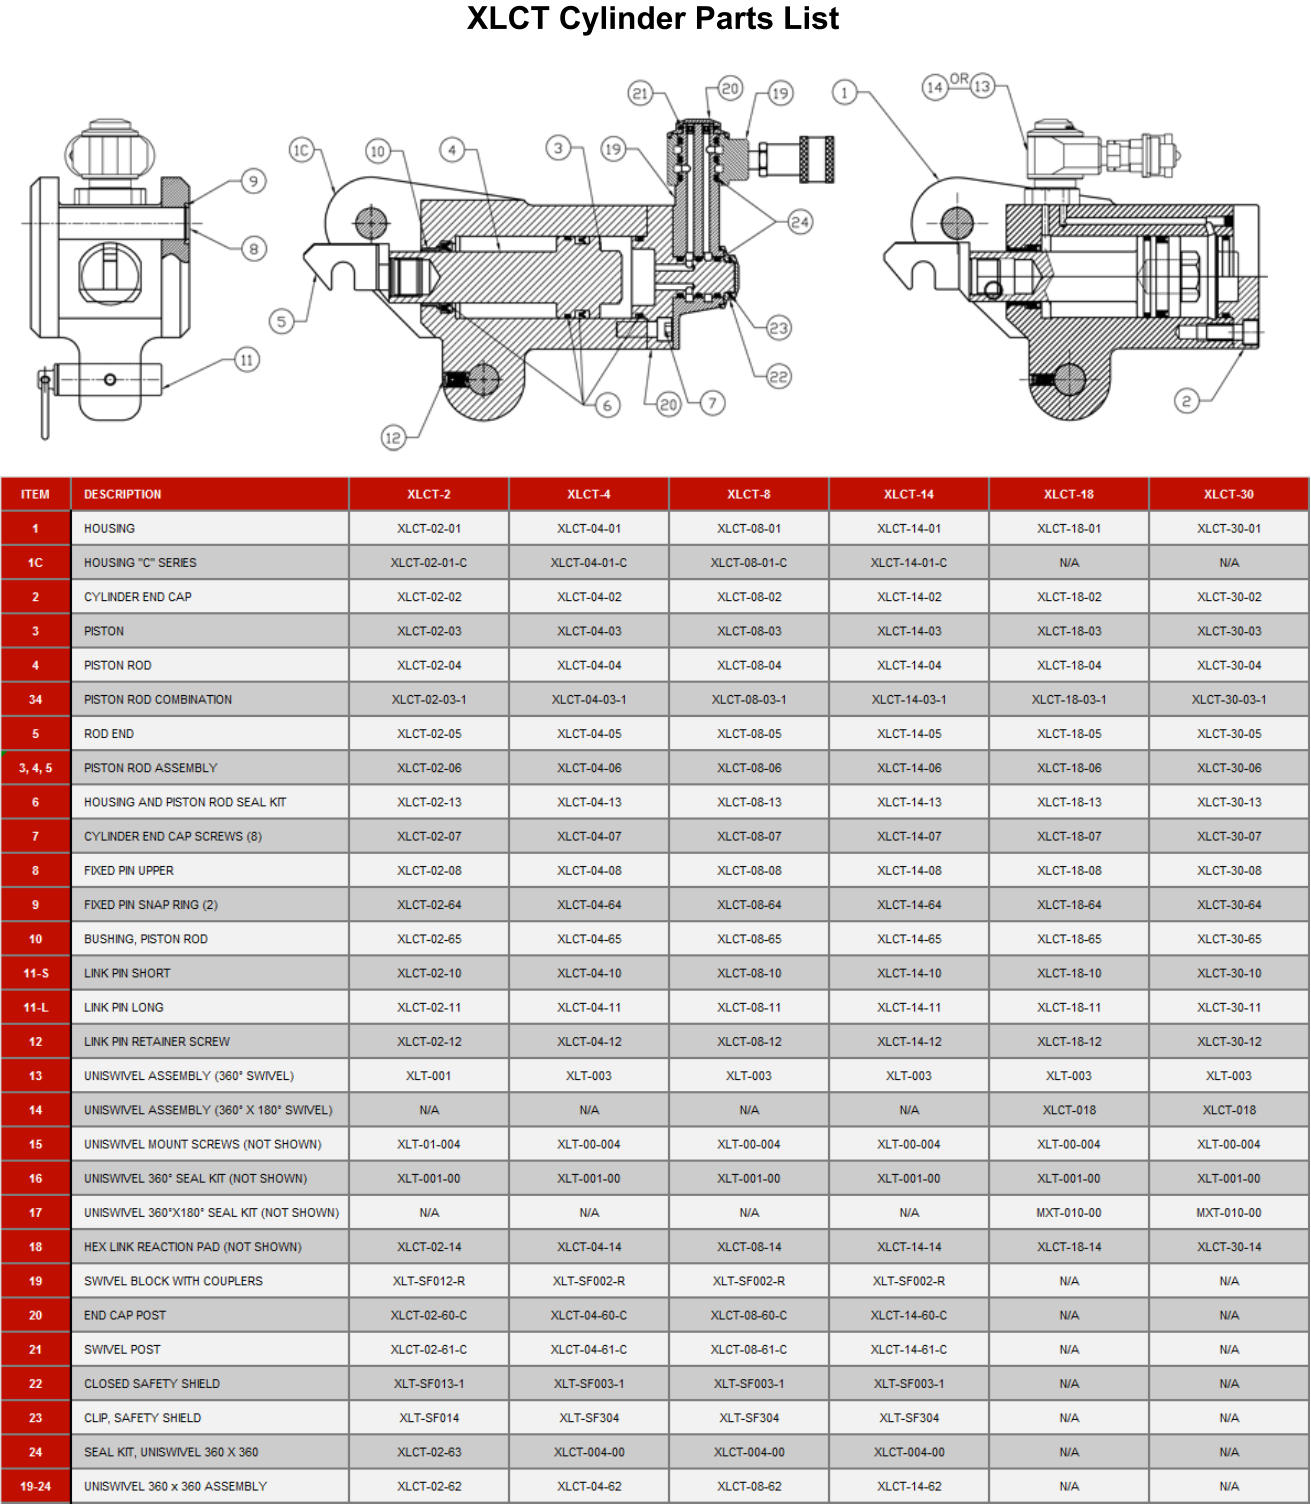 XLCT Cylinder Parts List